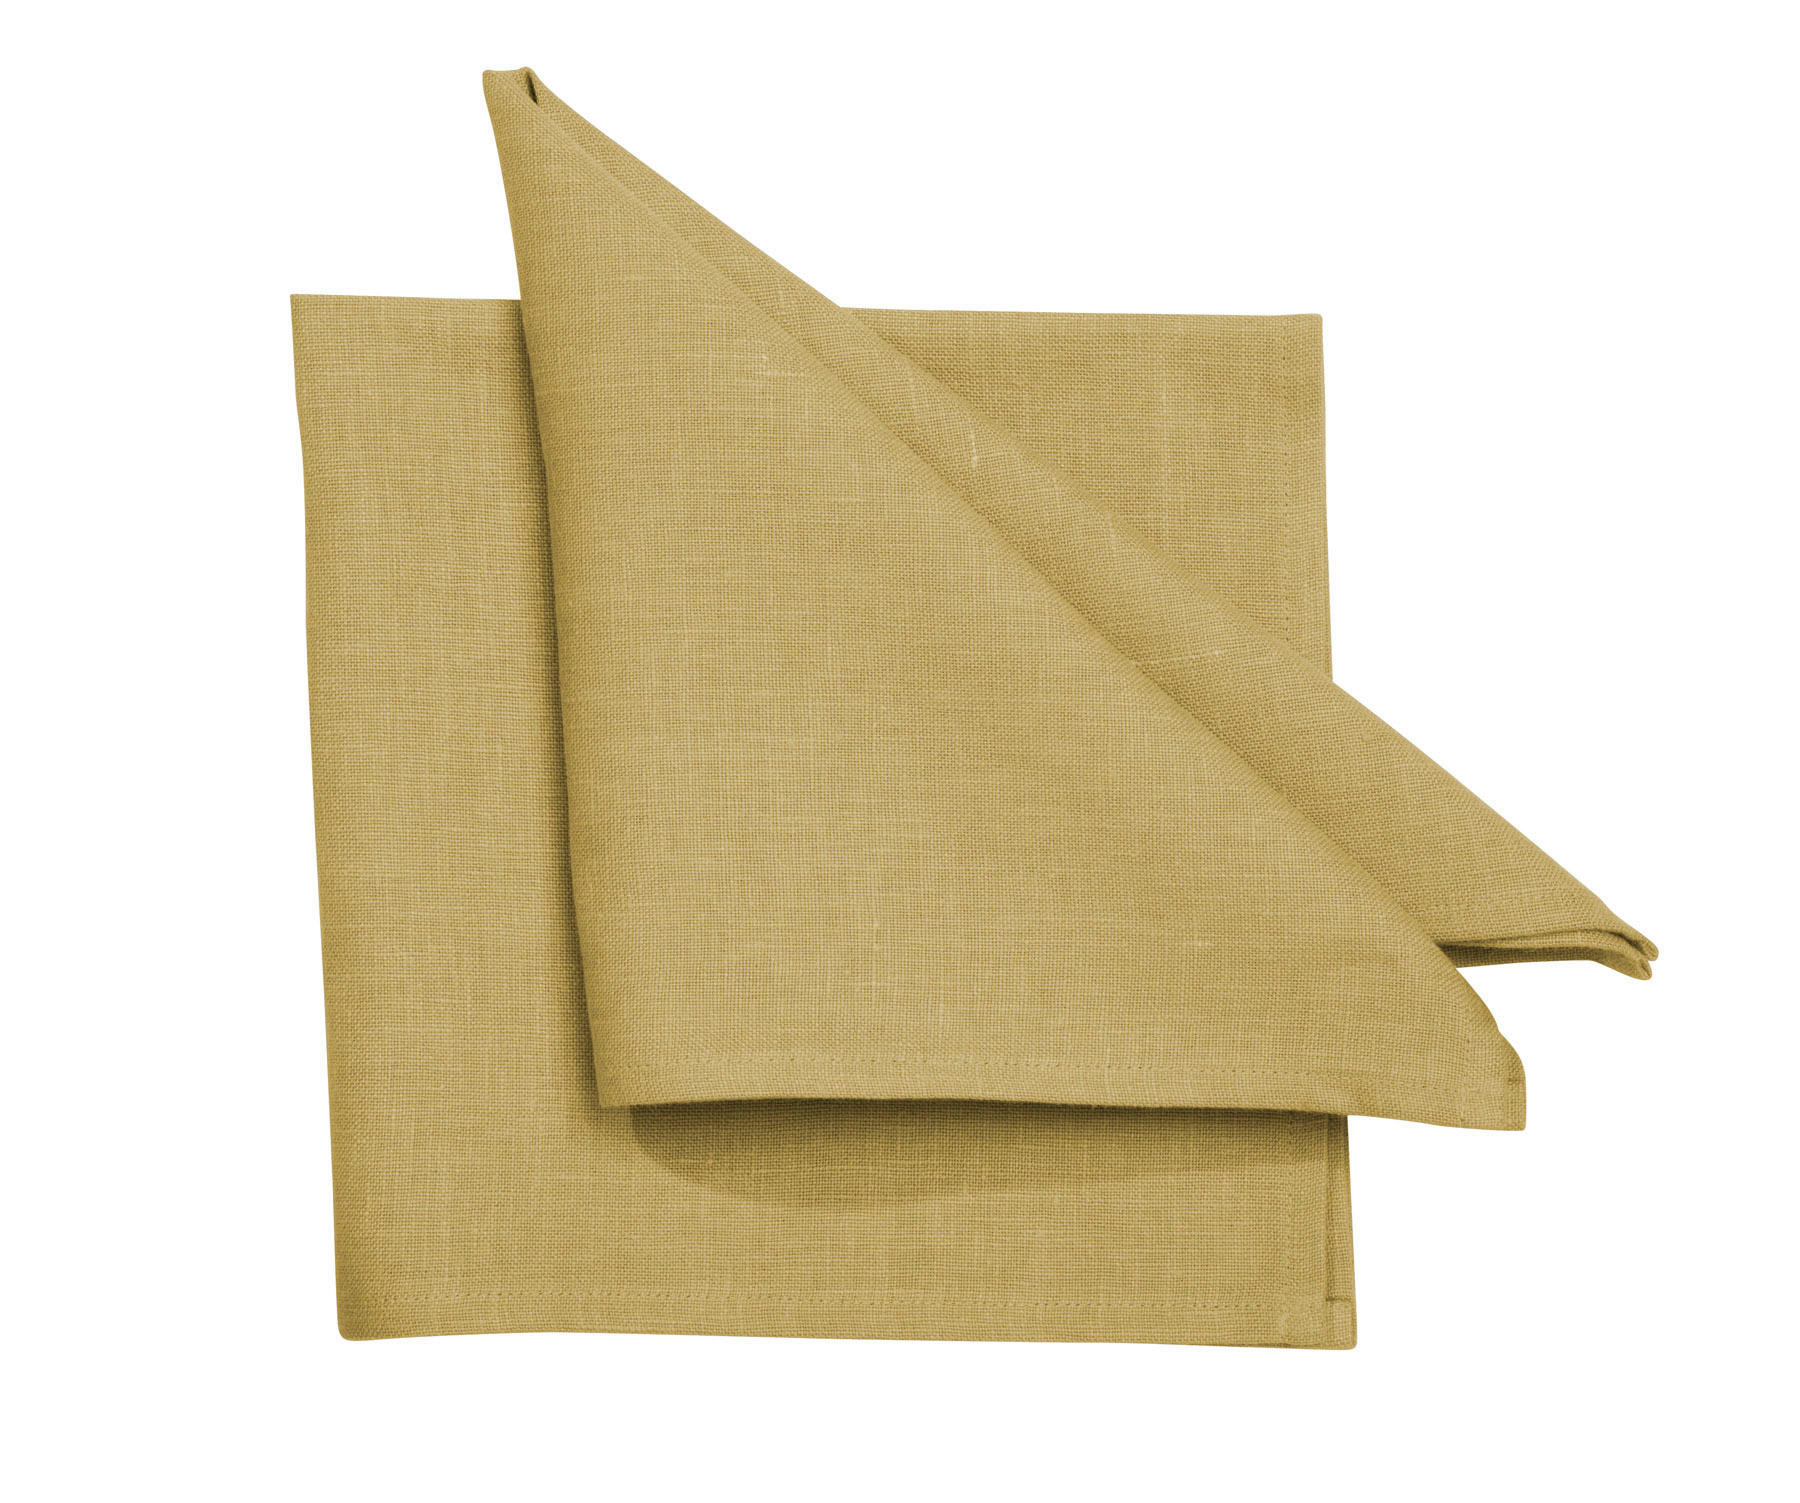 TISCHSET Textil Leinenoptik Gelb 35/50 cm  - Gelb, Basics, Textil (35/50cm) - Pichler